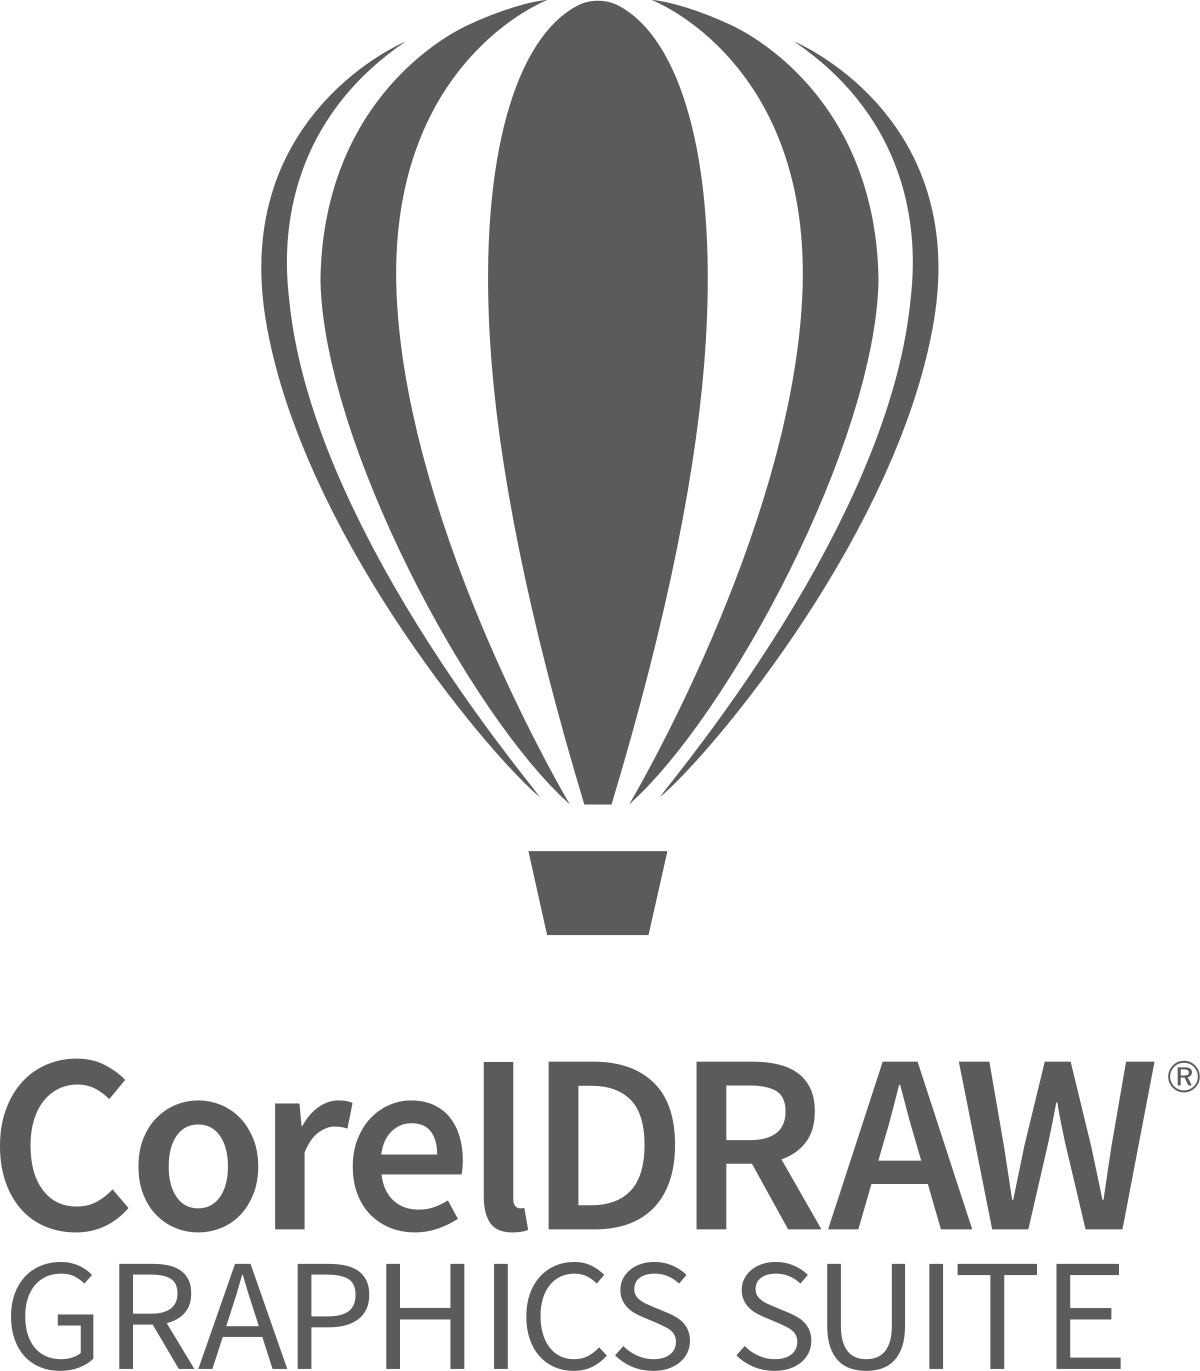 what is coreldraw graphics suite